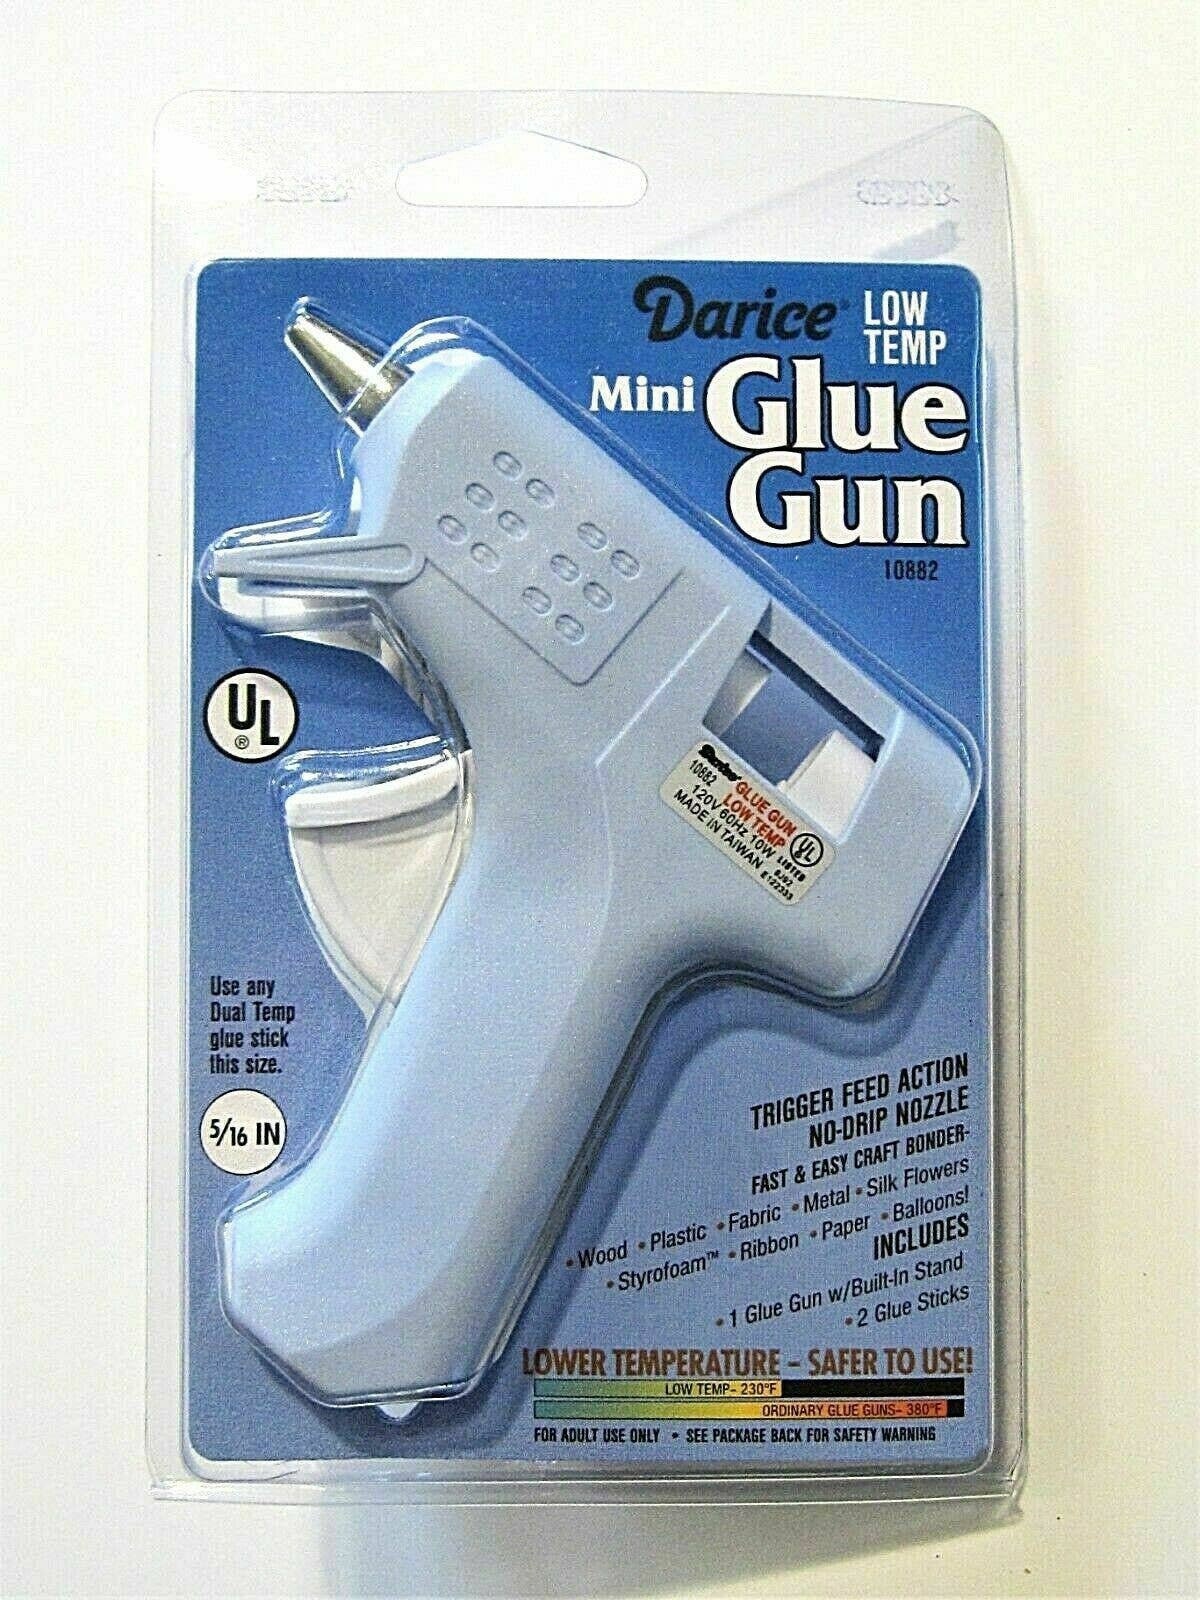 Glue Gun Low Temp Mini